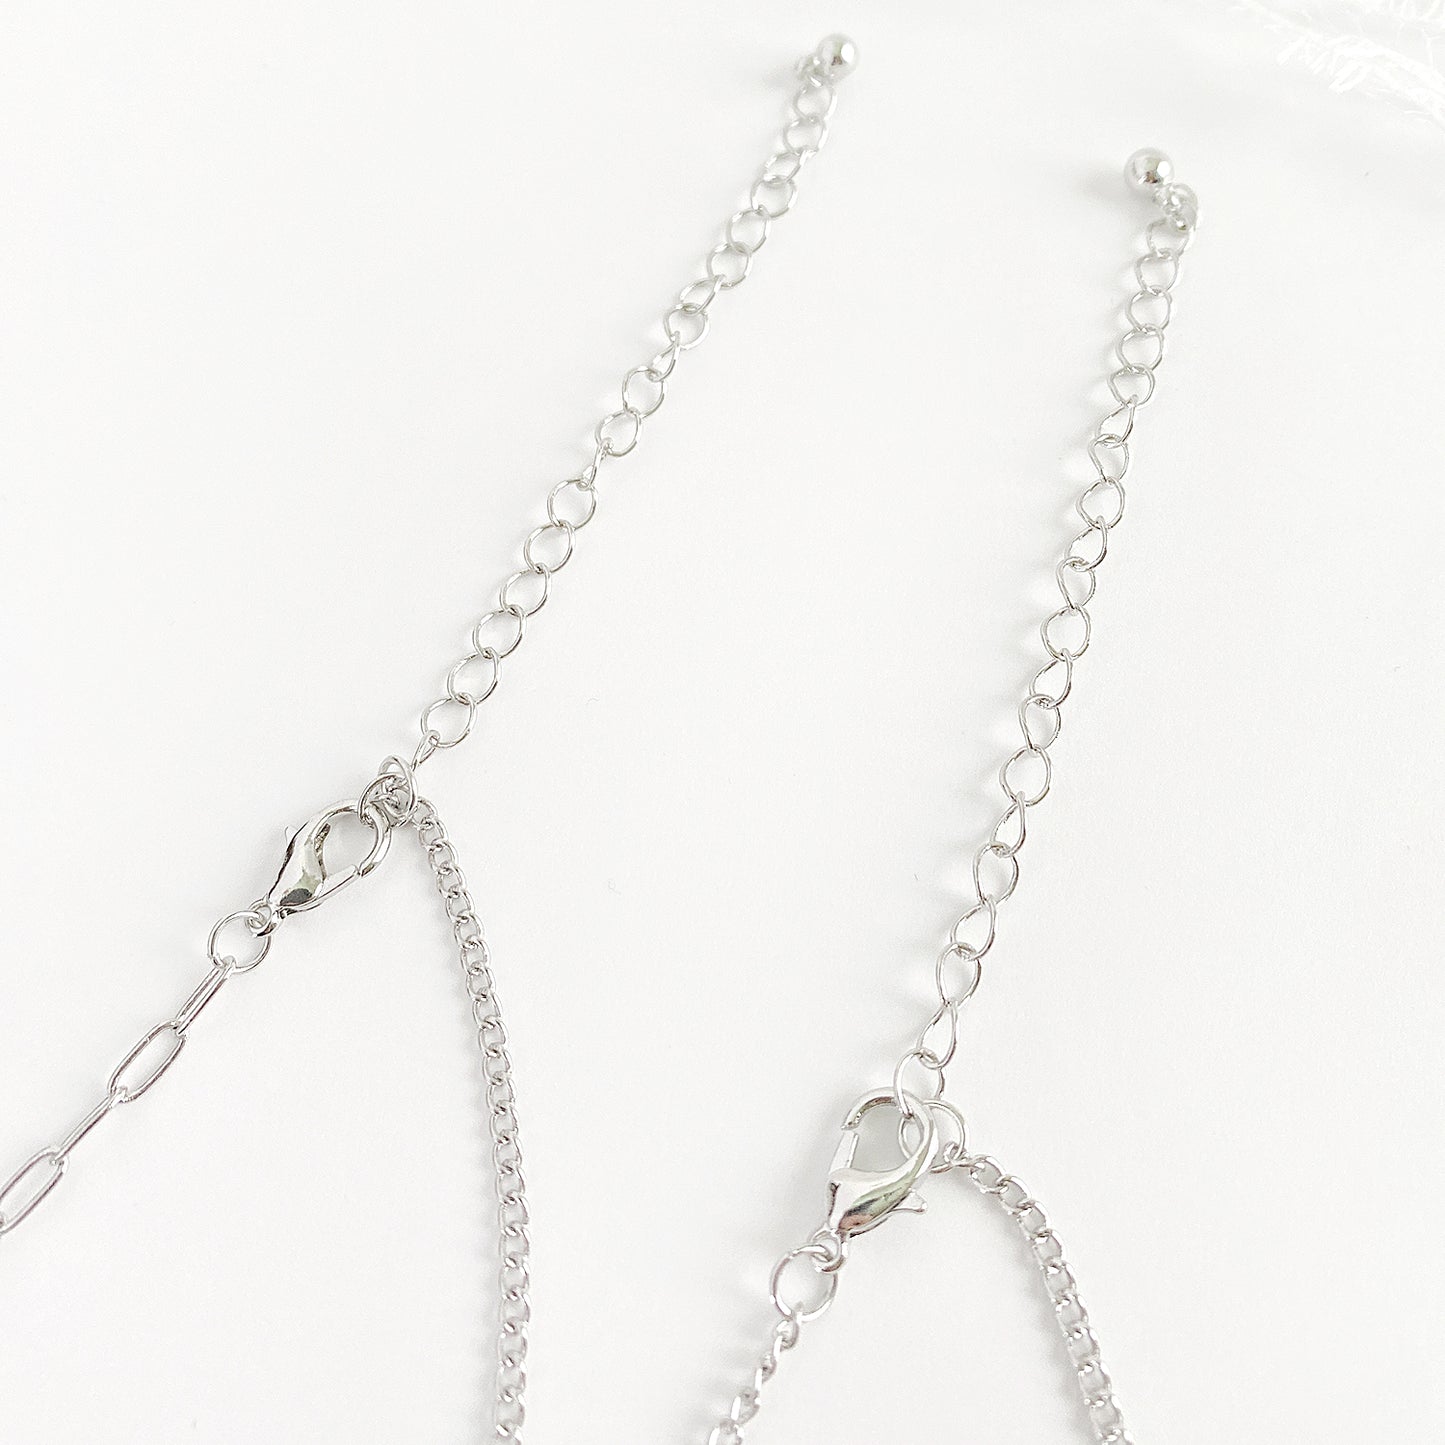 8bit Heart Double Chain Necklace Silver